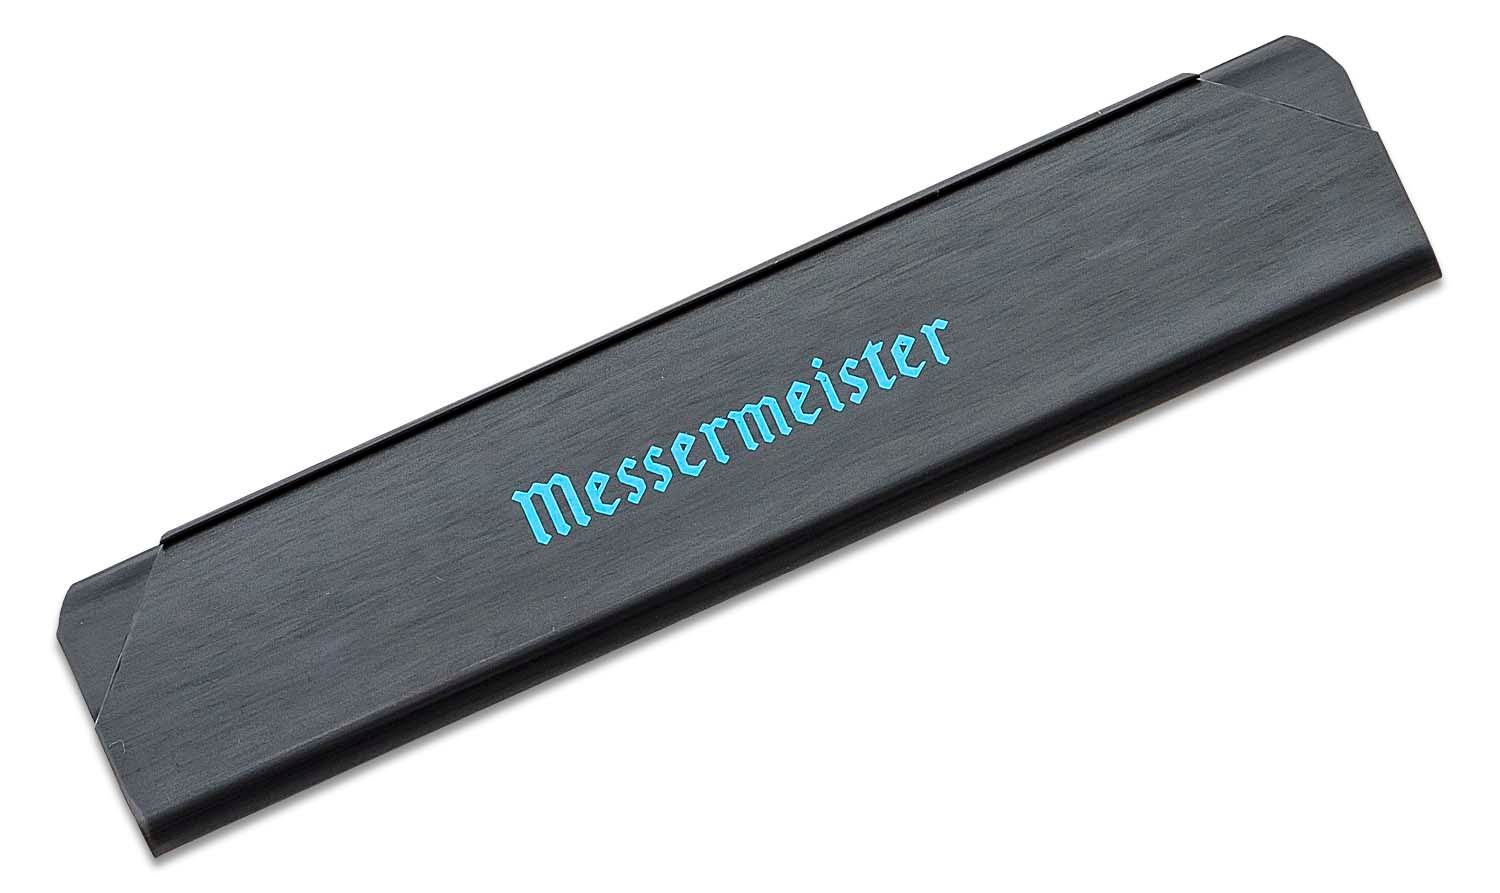 Messermeister 8 Chef's Knife Edge-Guard Black